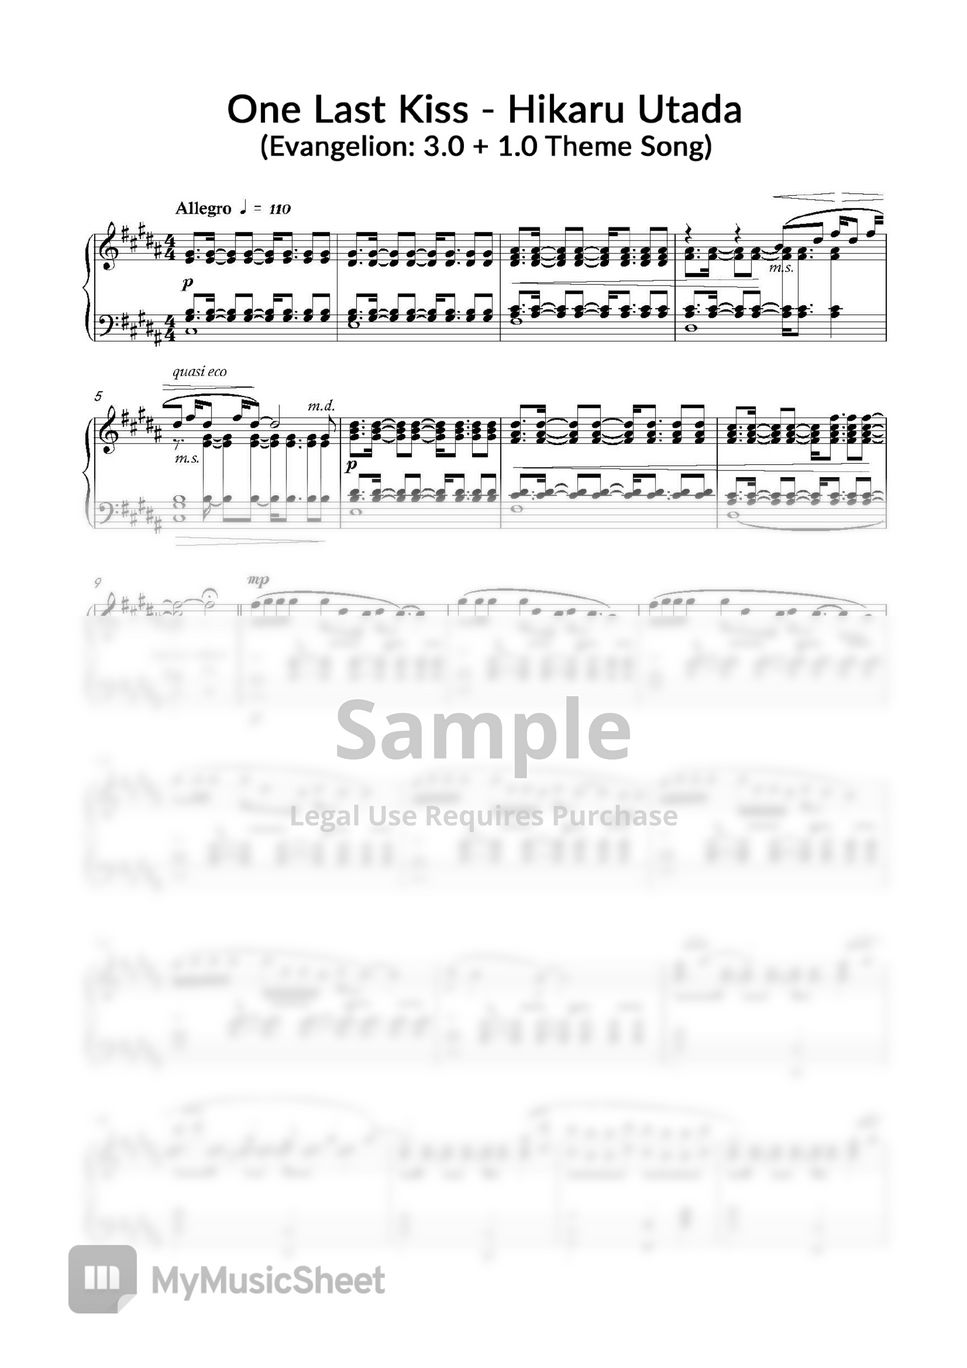 Hikaru Utada - One Last Kiss - Hikaru Utada (Evangelion 3.0 + 1.0 Theme Song) Piano by BWC Piano Tutorial